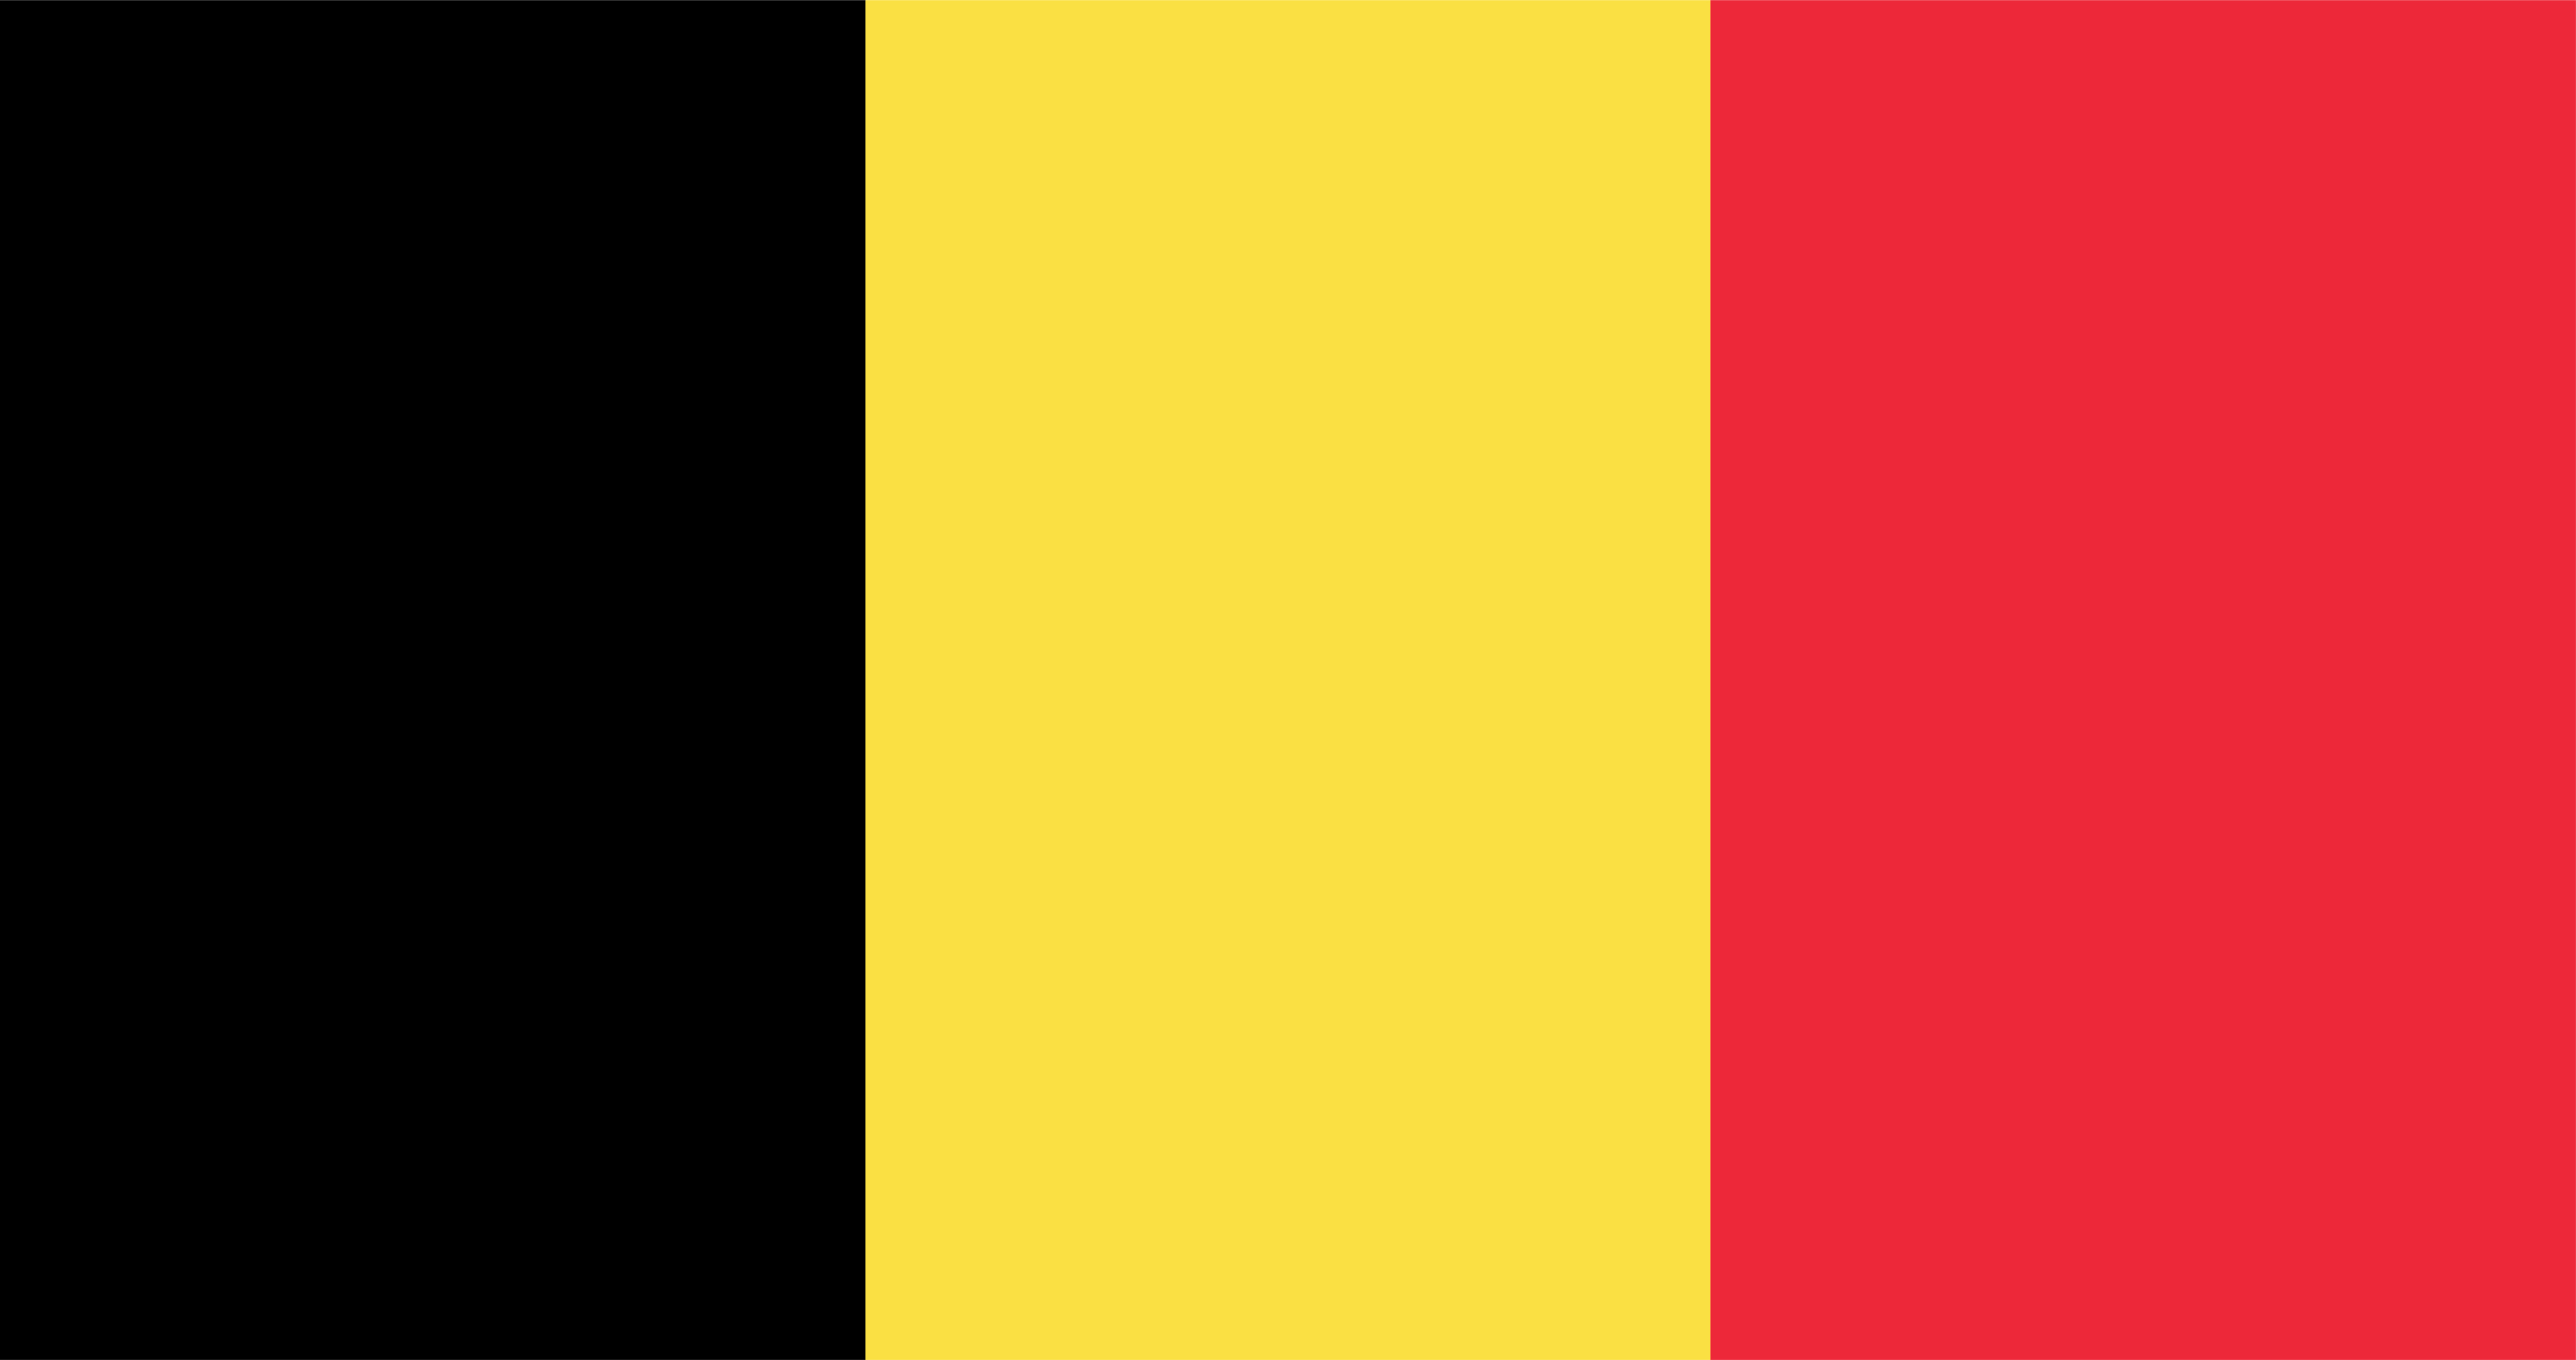 Download Illustration of Belgium flag - Download Free Vectors ...